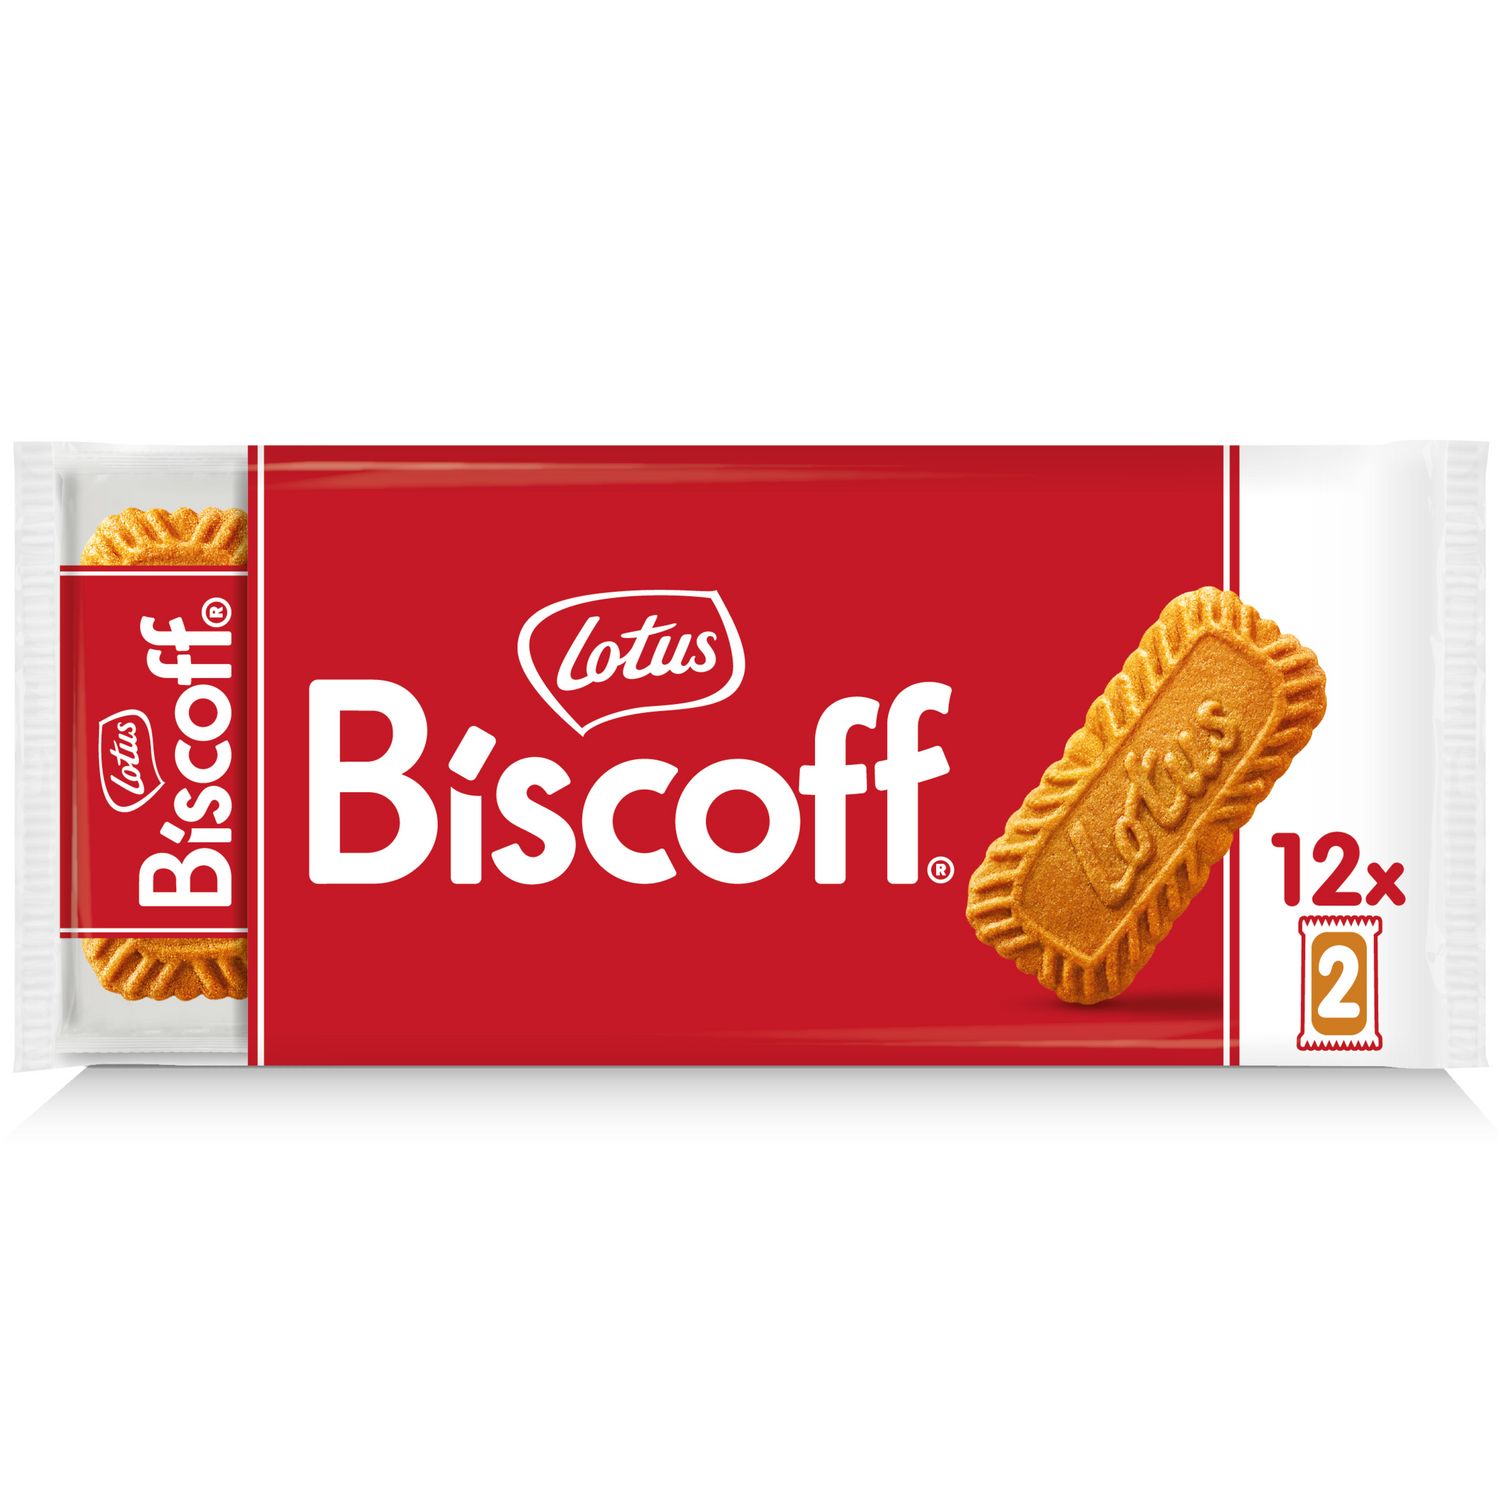 LOTUS Biscoff Biscuits Speculoos original sachets fraîcheur Format familial  6x125g pas cher 